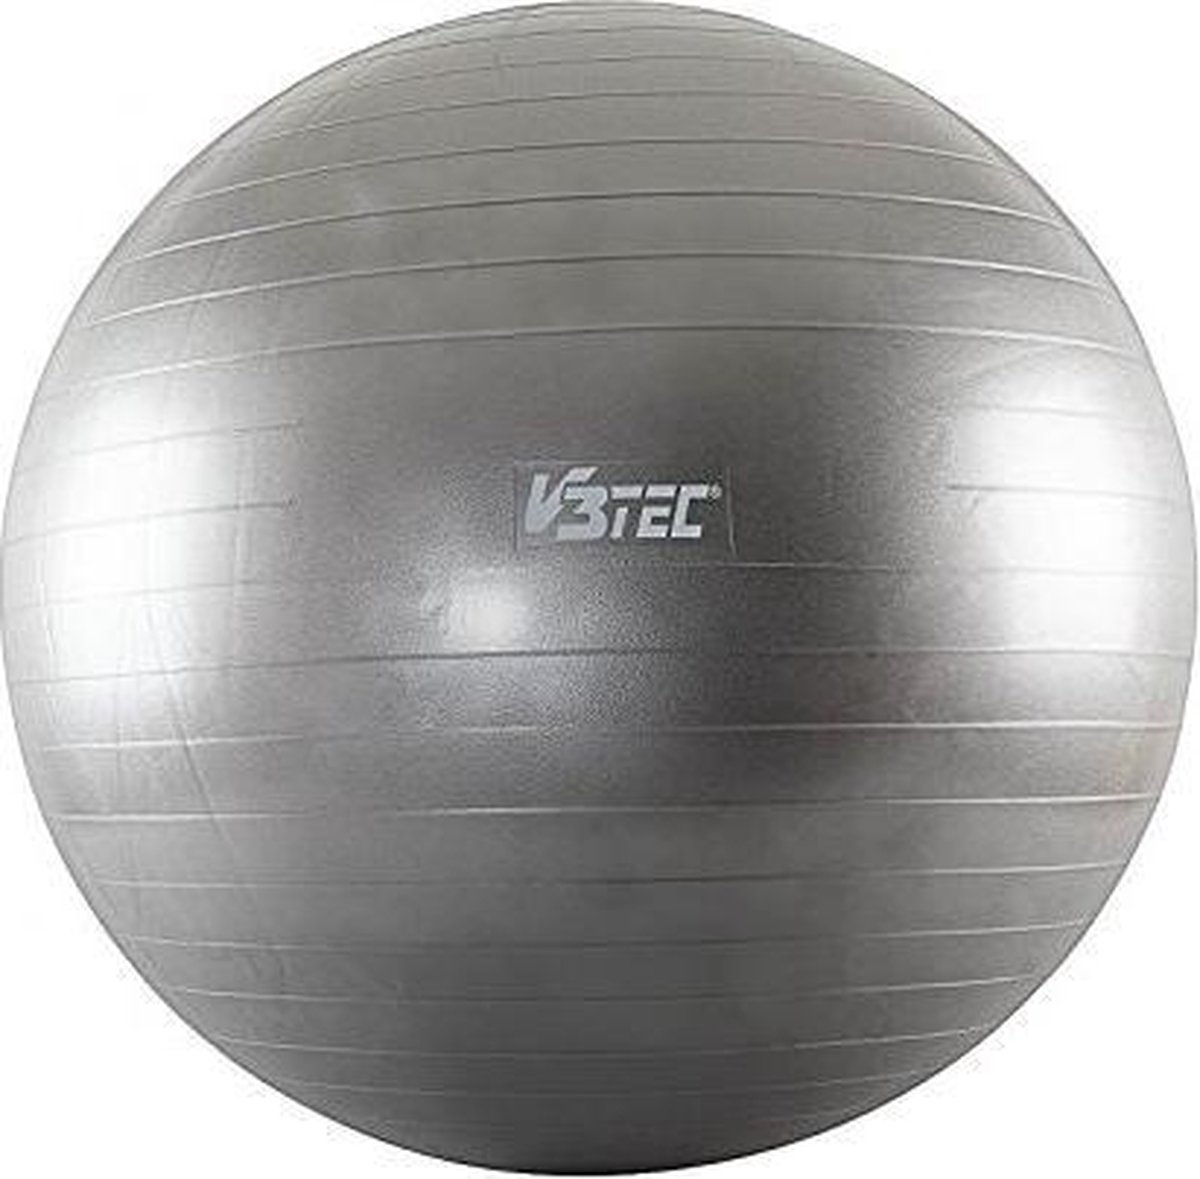 V3TEC - Gymnastic Ball - 85 cm - Zilver